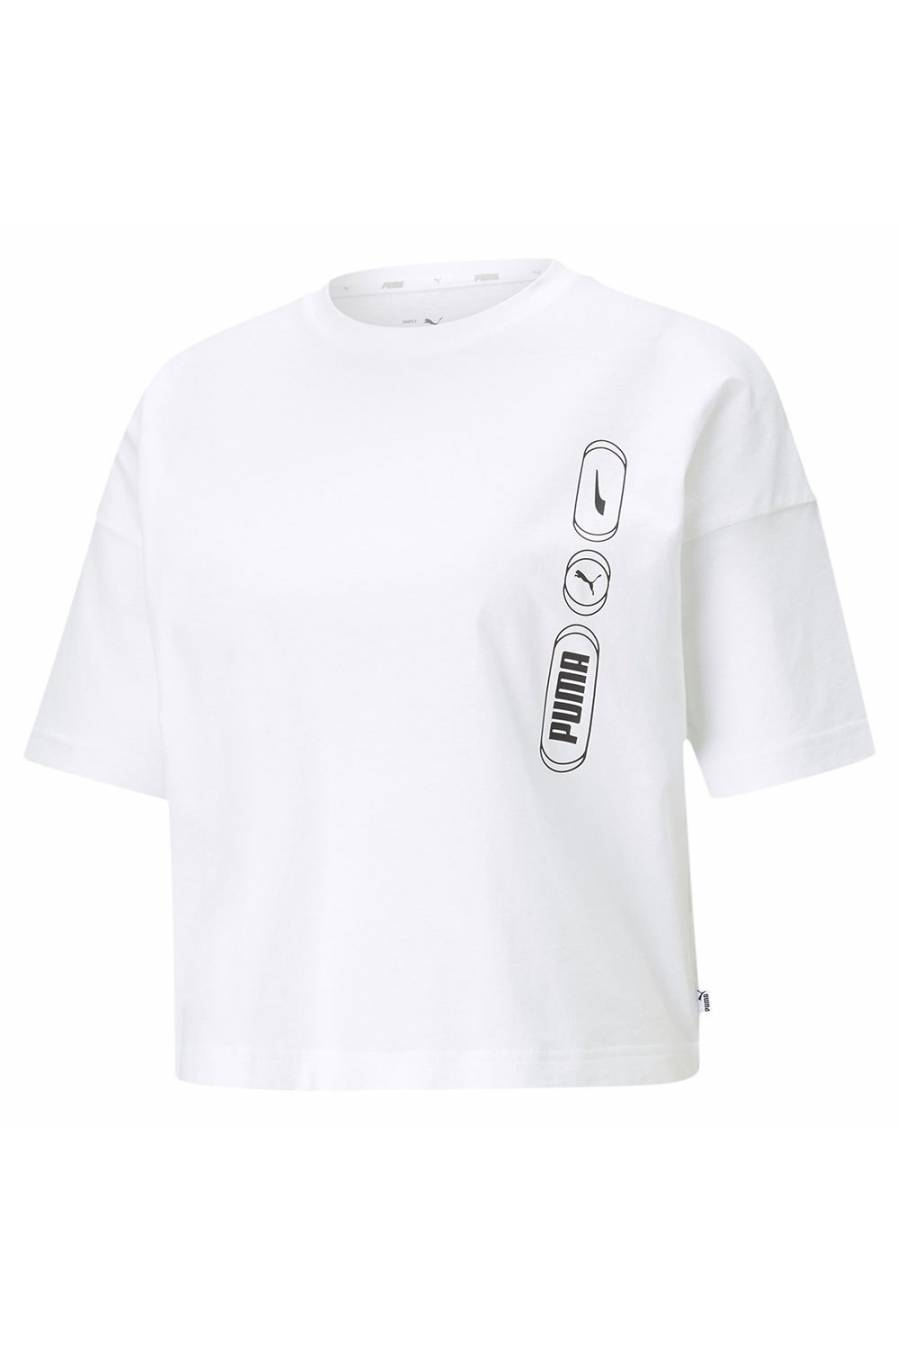 Torbellino Porcentaje Formular Camiseta Puma Rebel Fashion Tee White